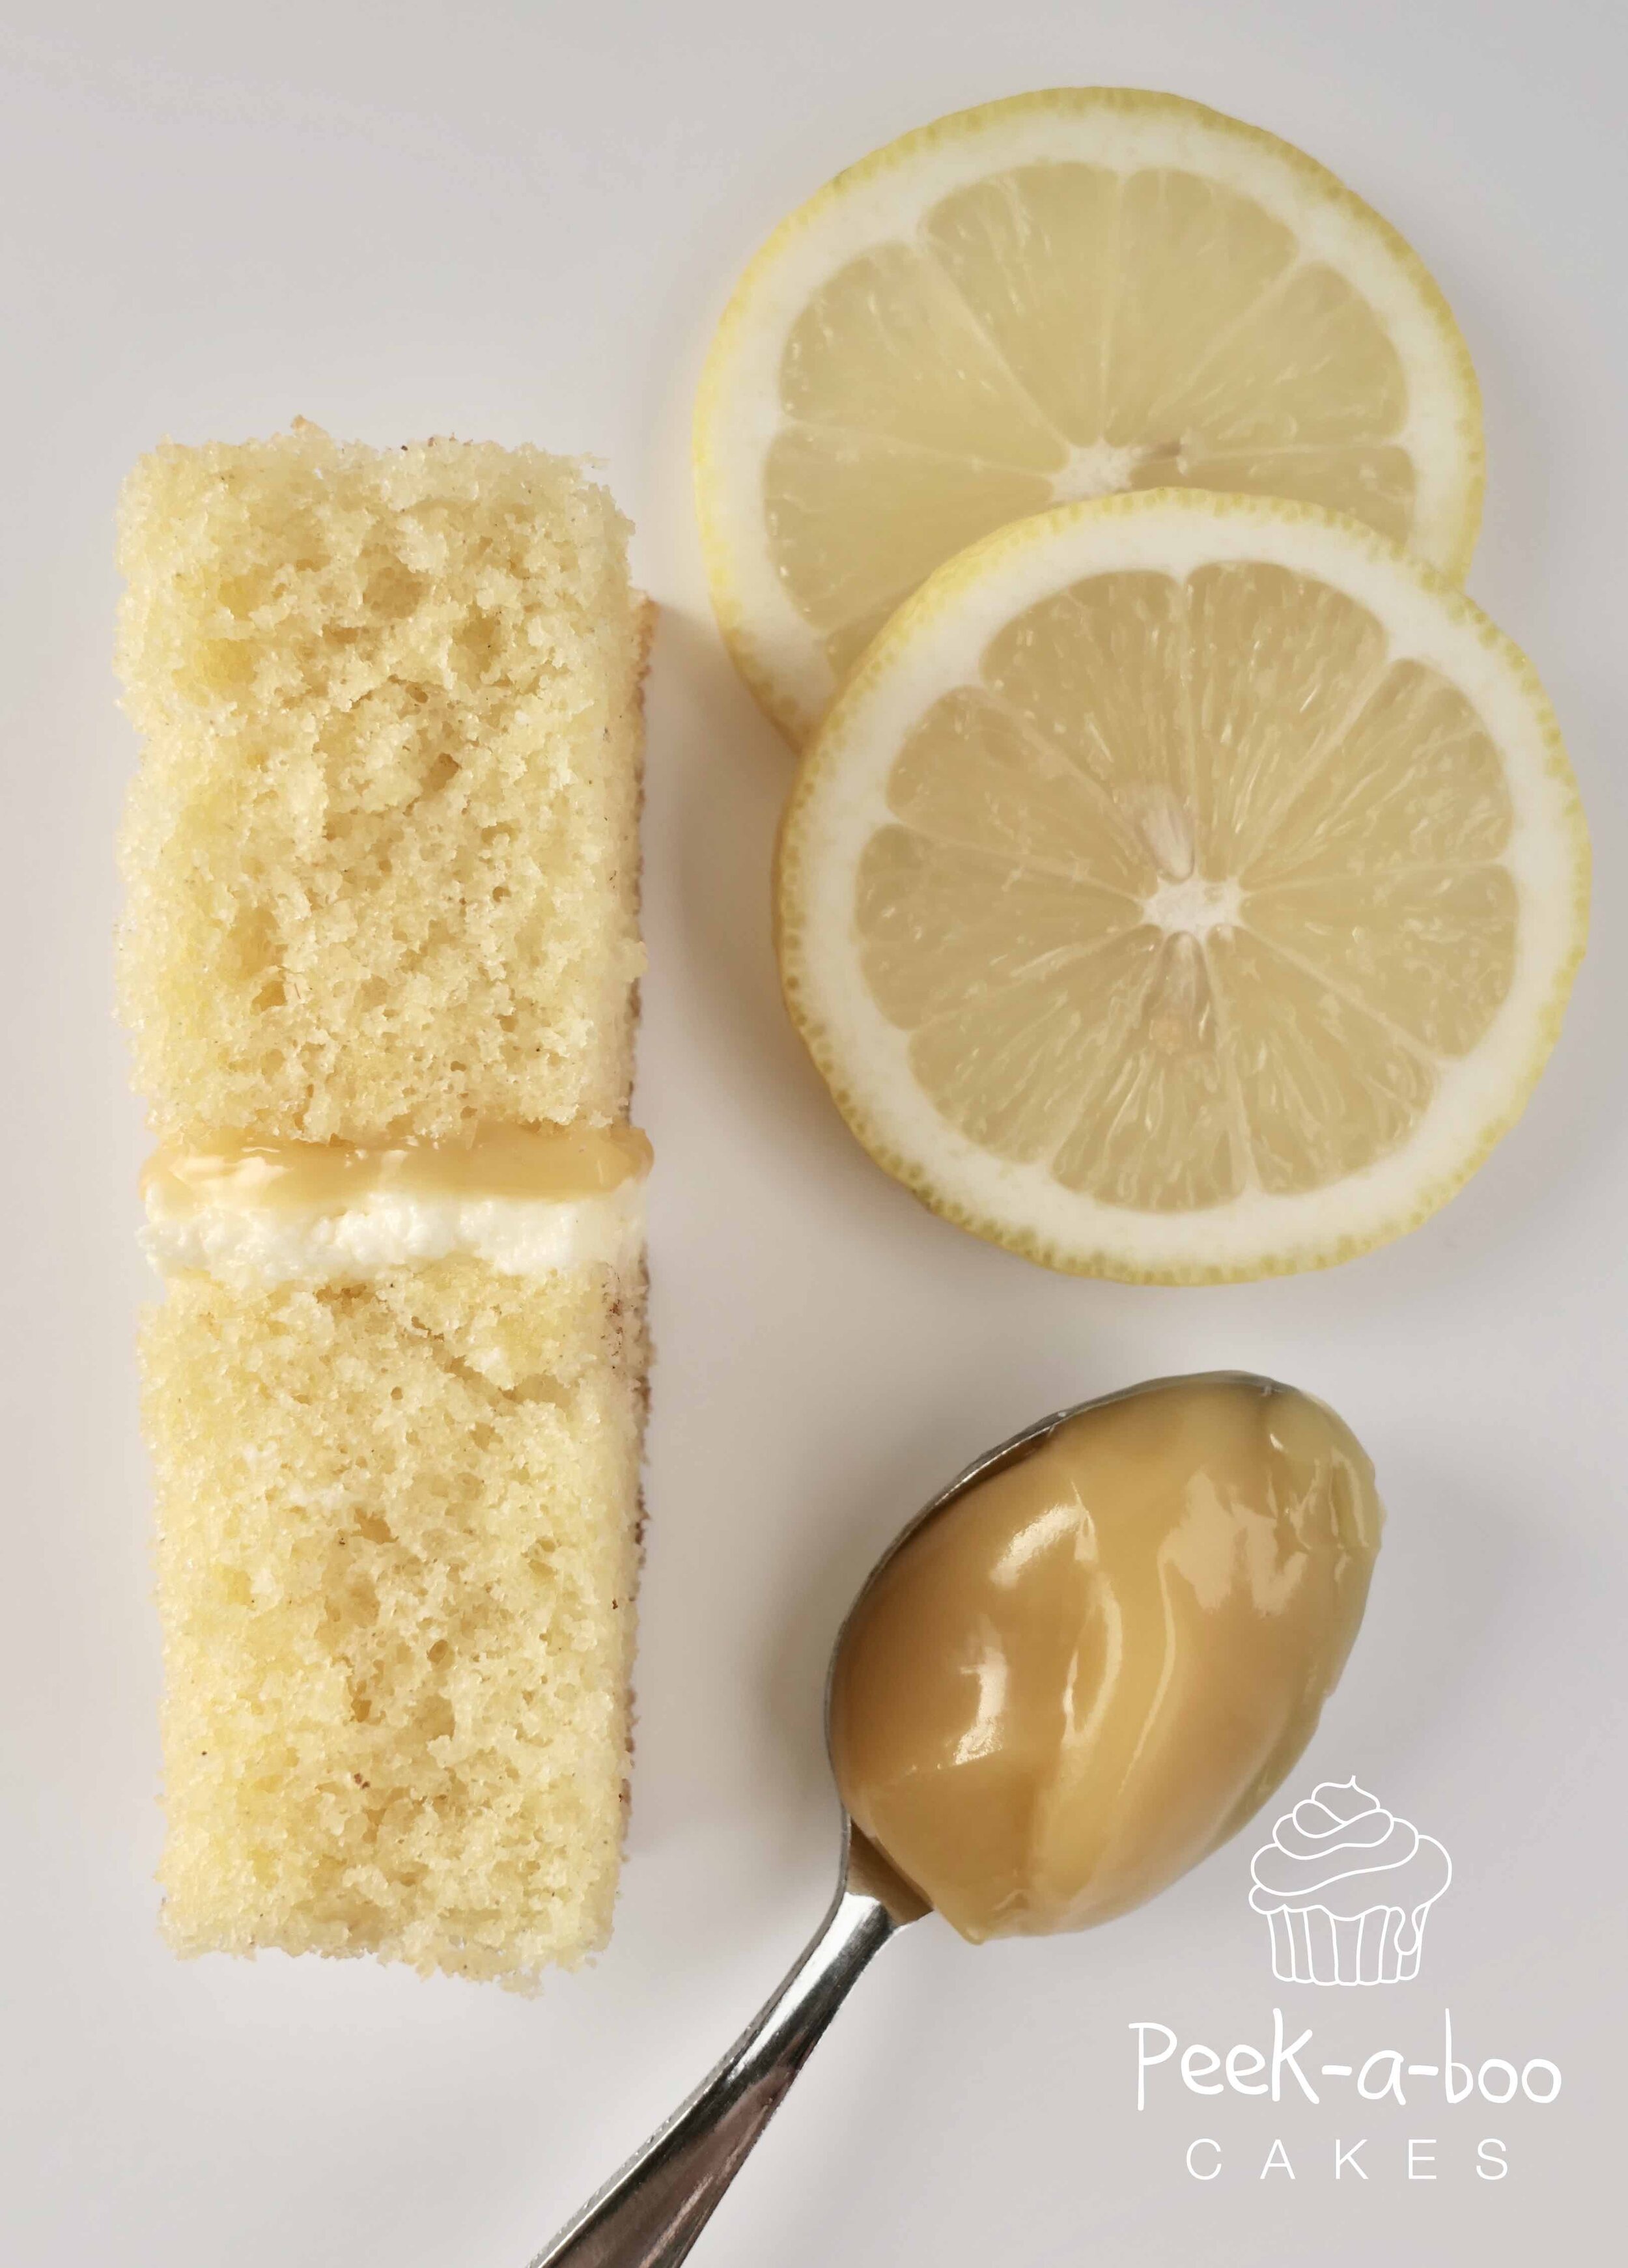 peek-a-boo cakes lemon cake